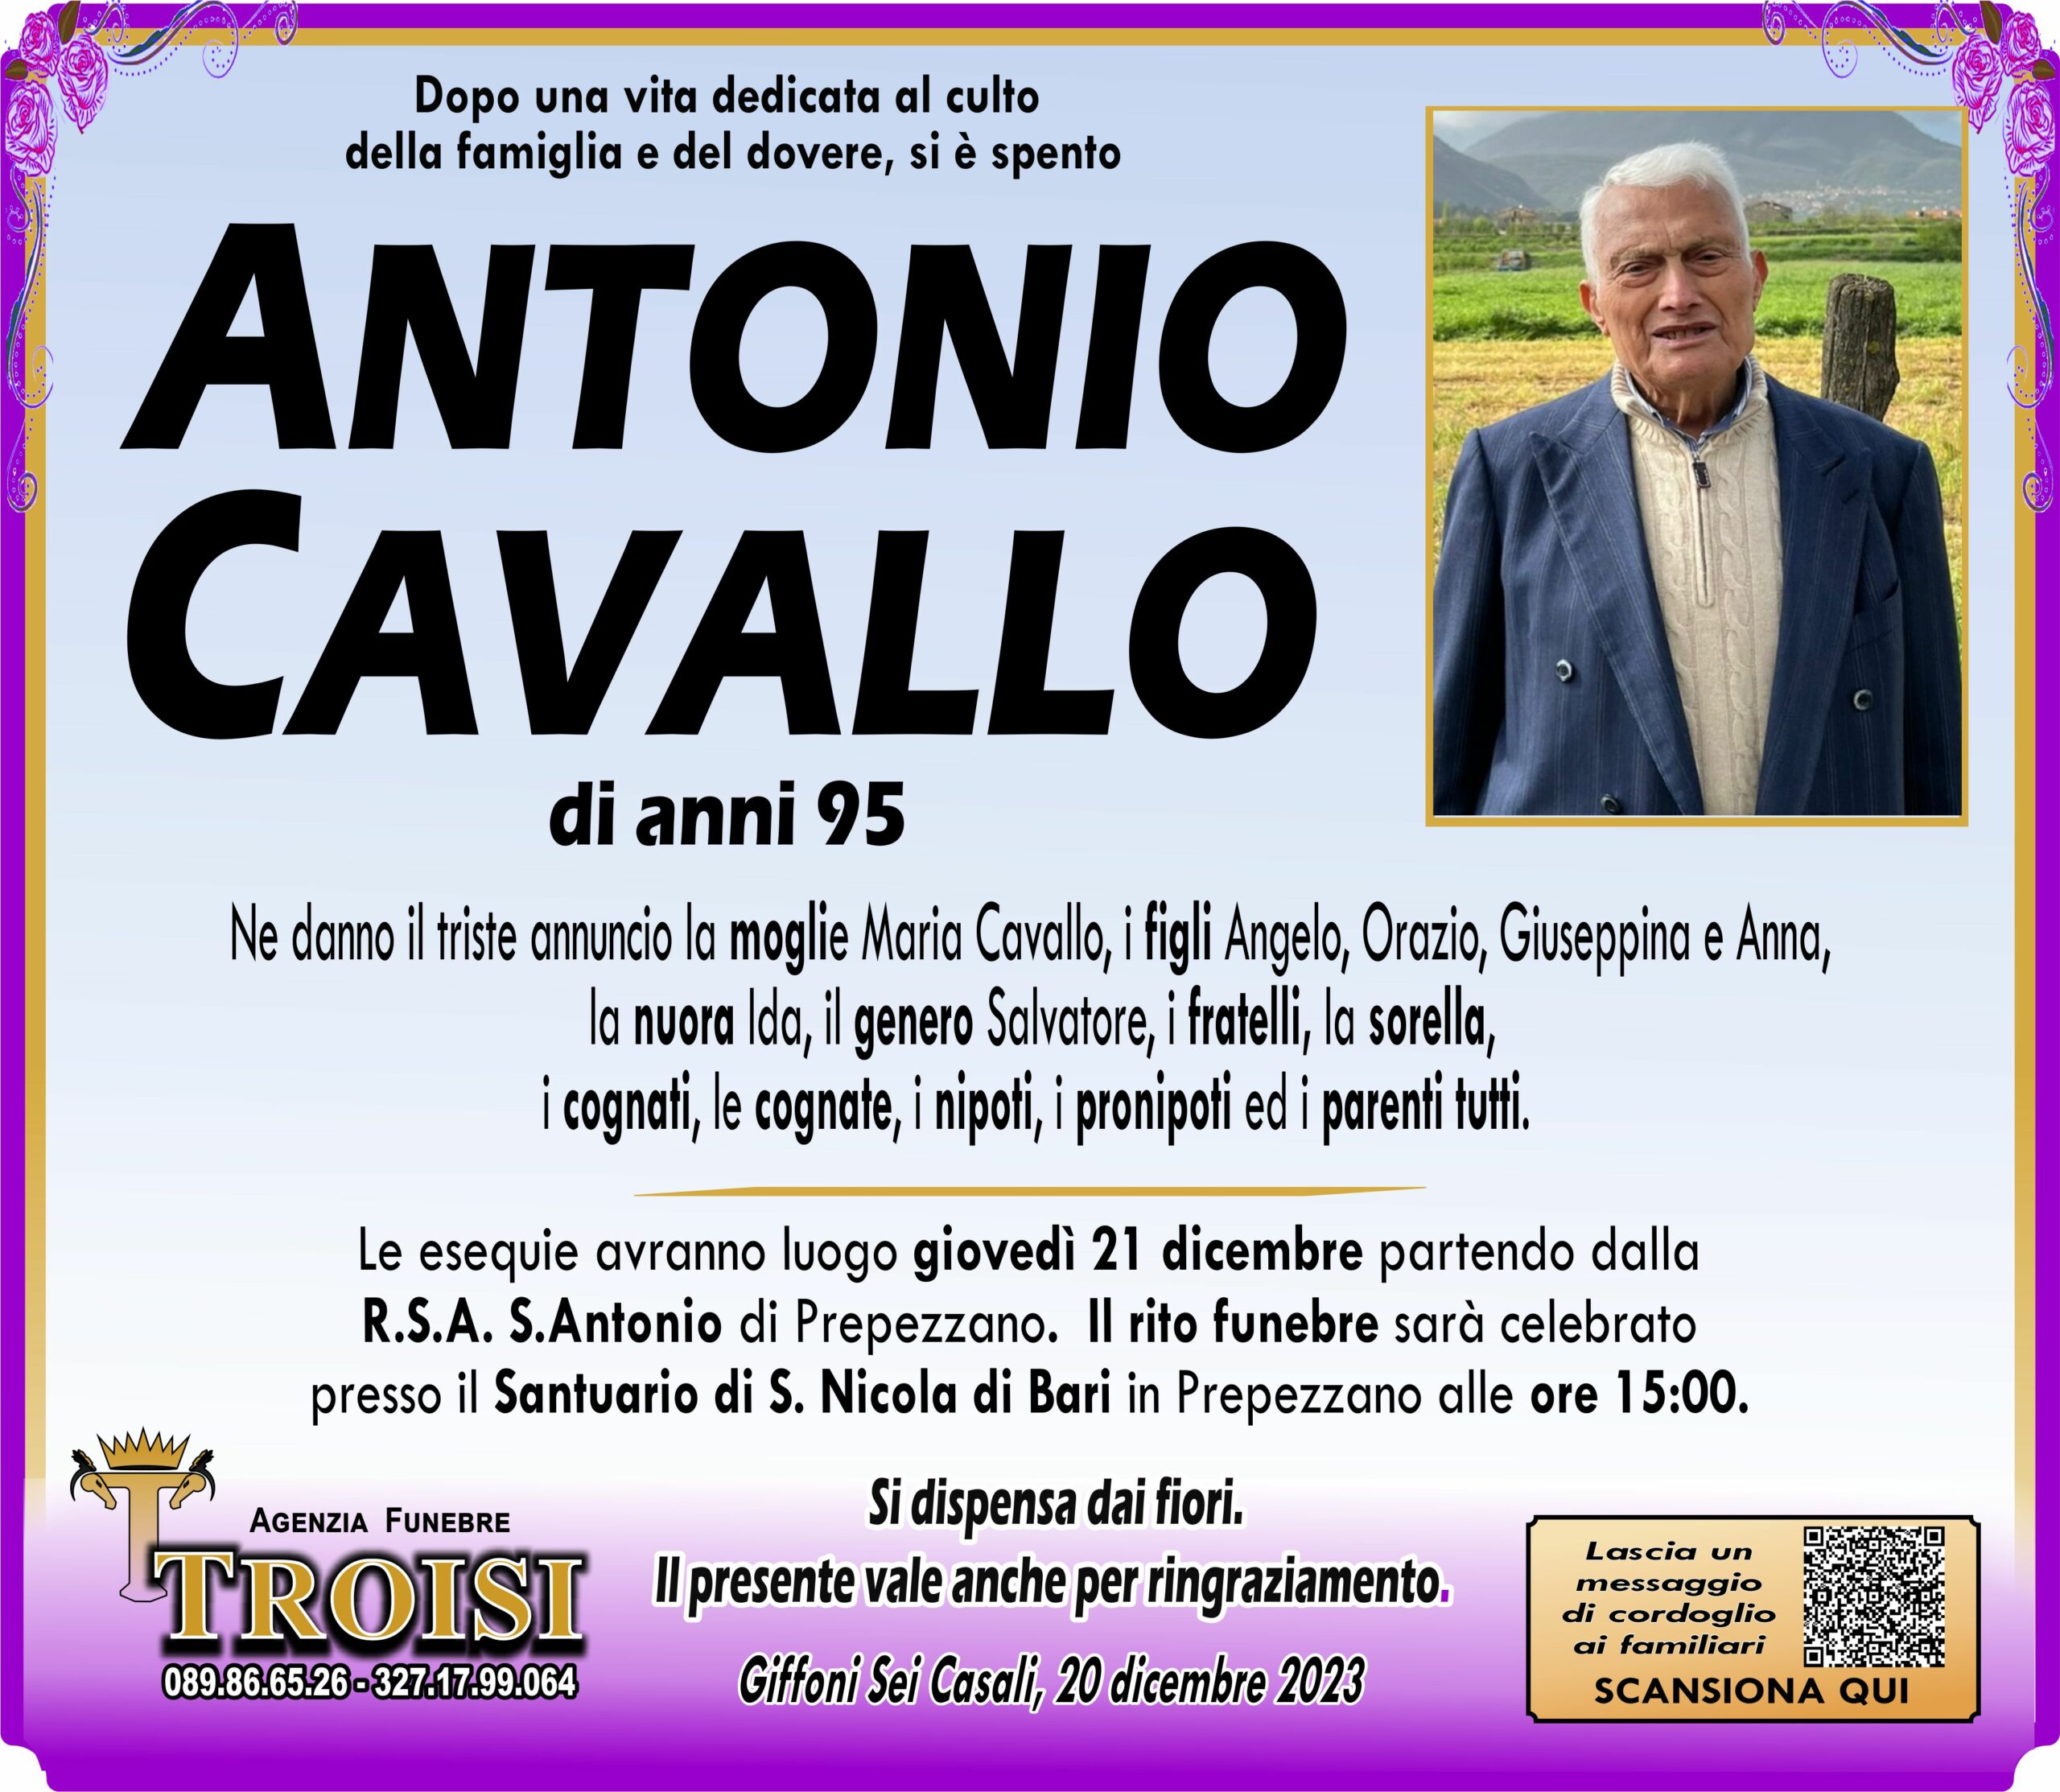 ANTONIO CAVALLO